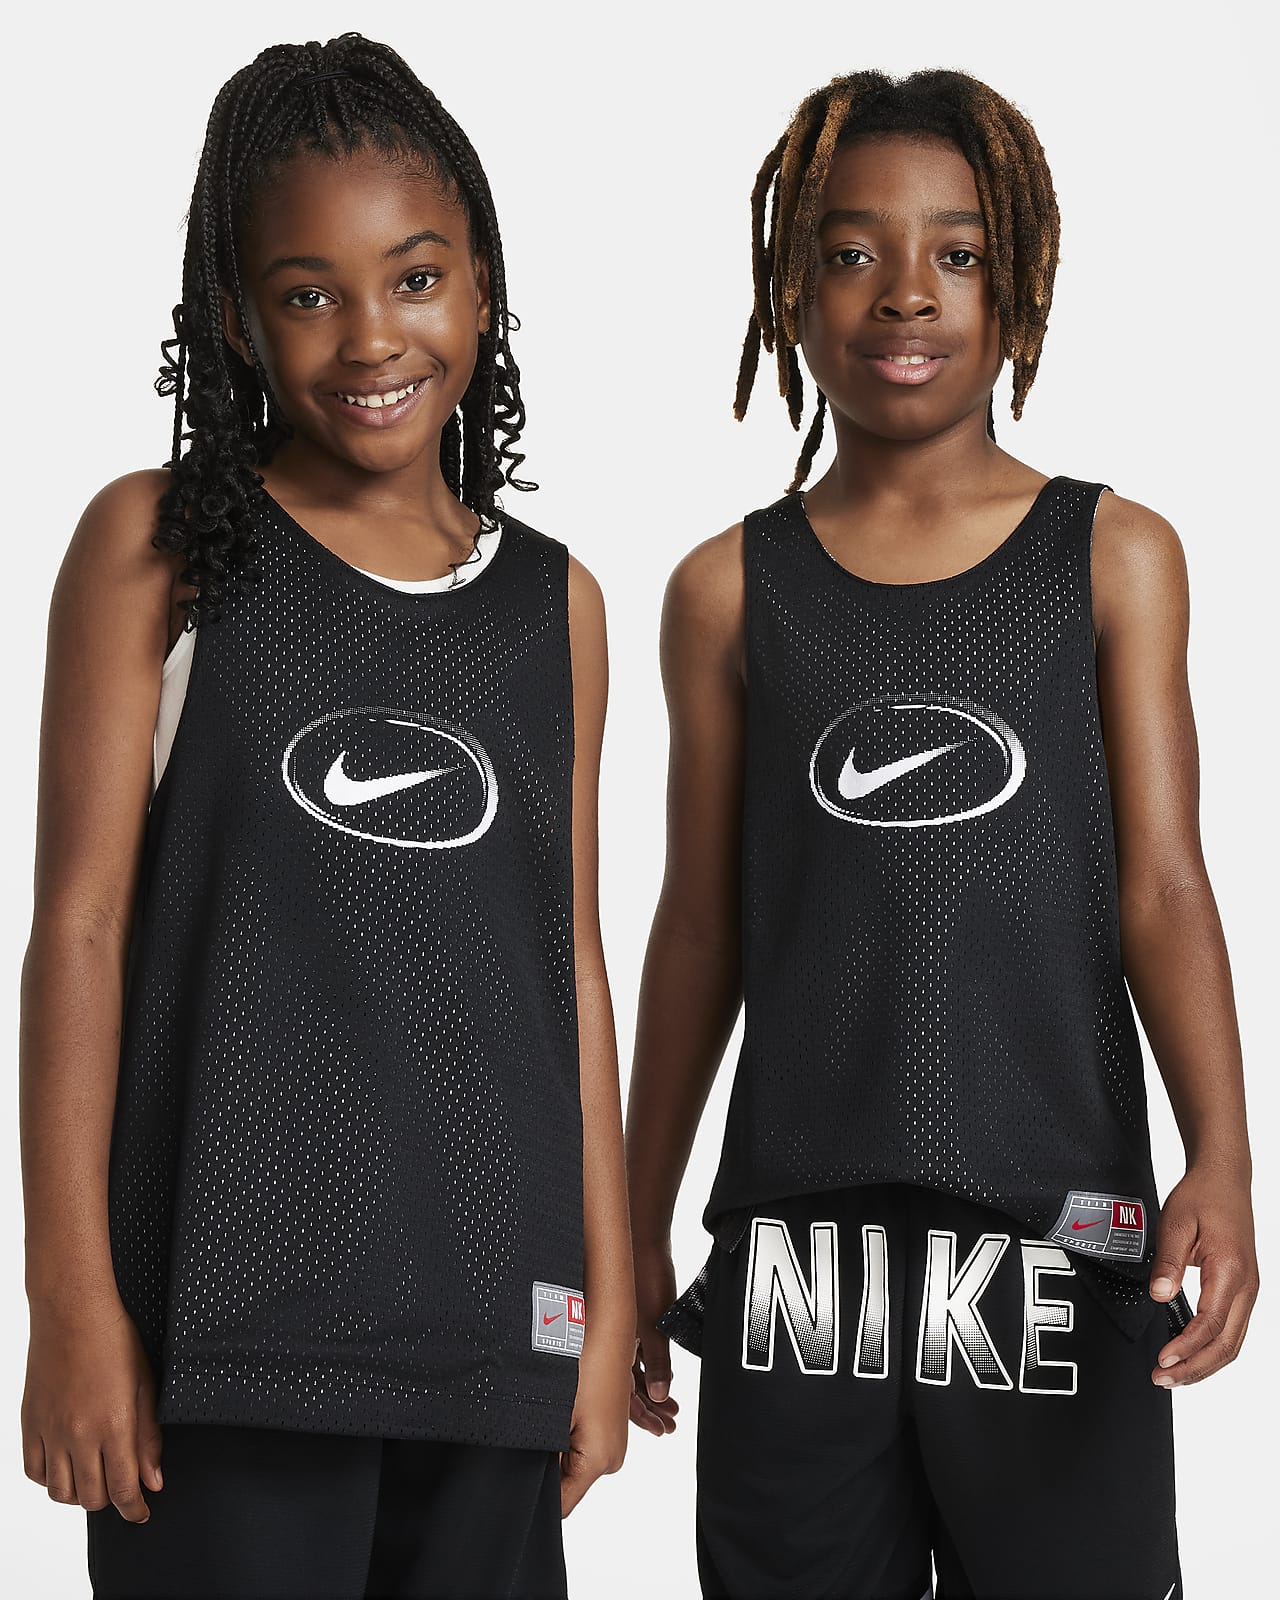 Nike Culture of Basketball Big Kids' Reversible Jersey